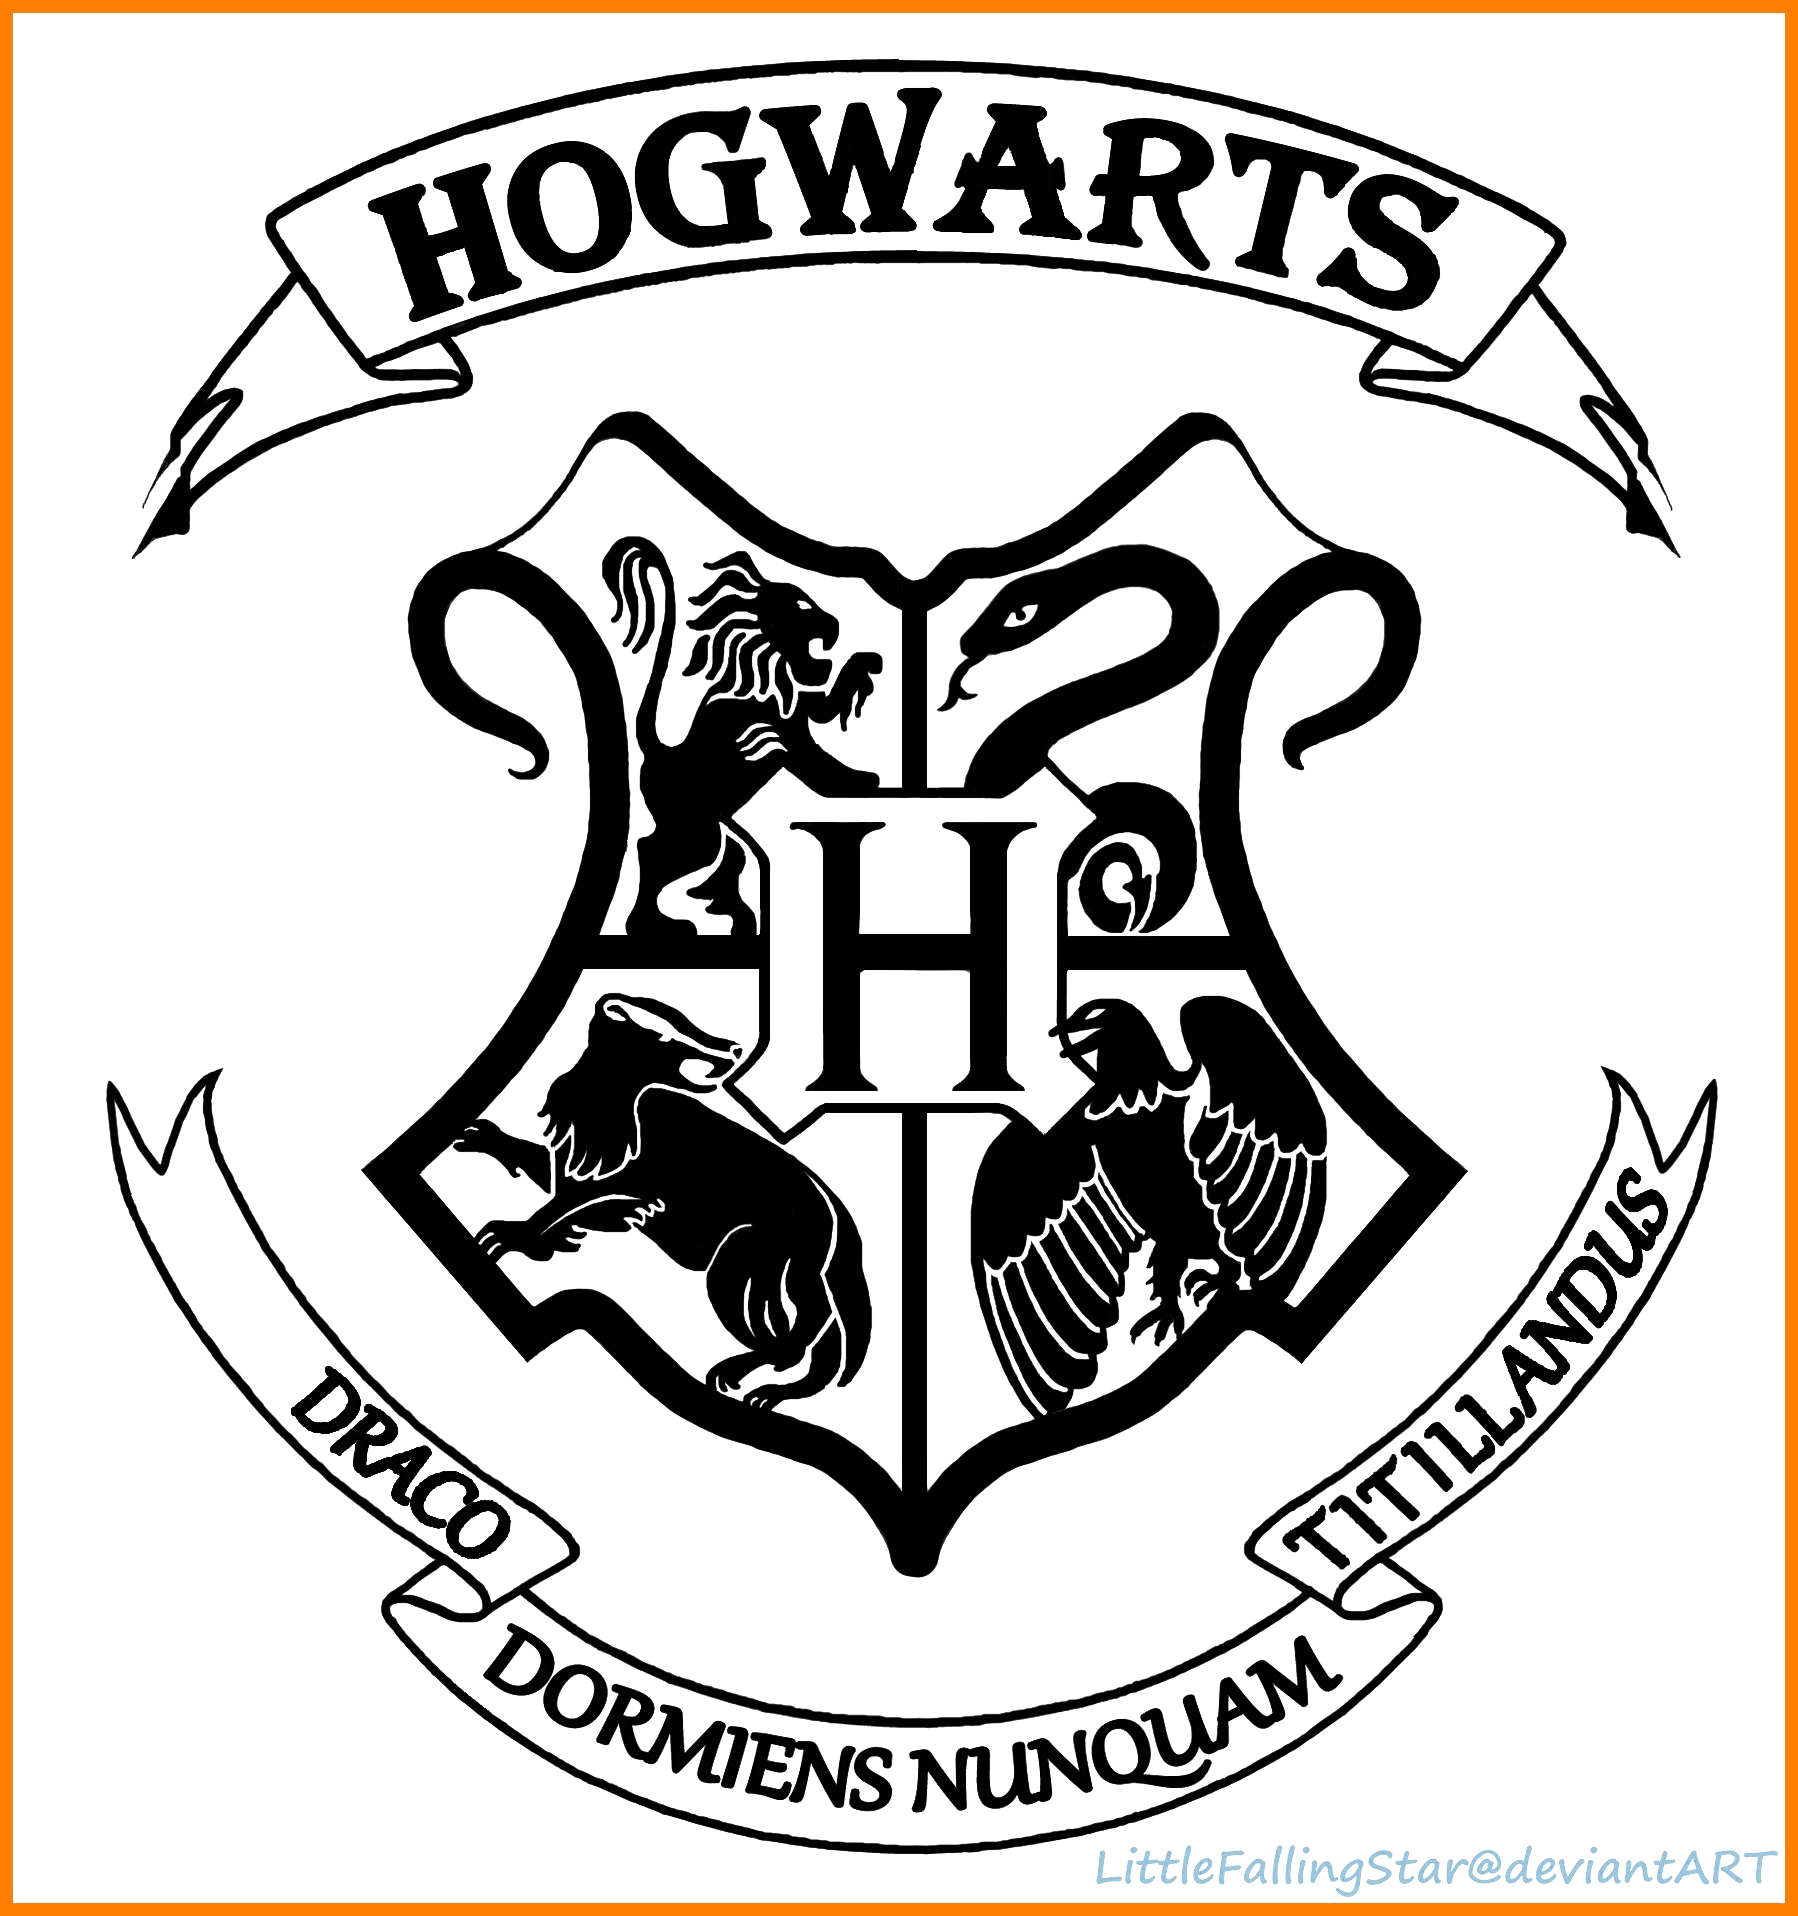 Hogwarts logo PNG transparenter Hintergrund